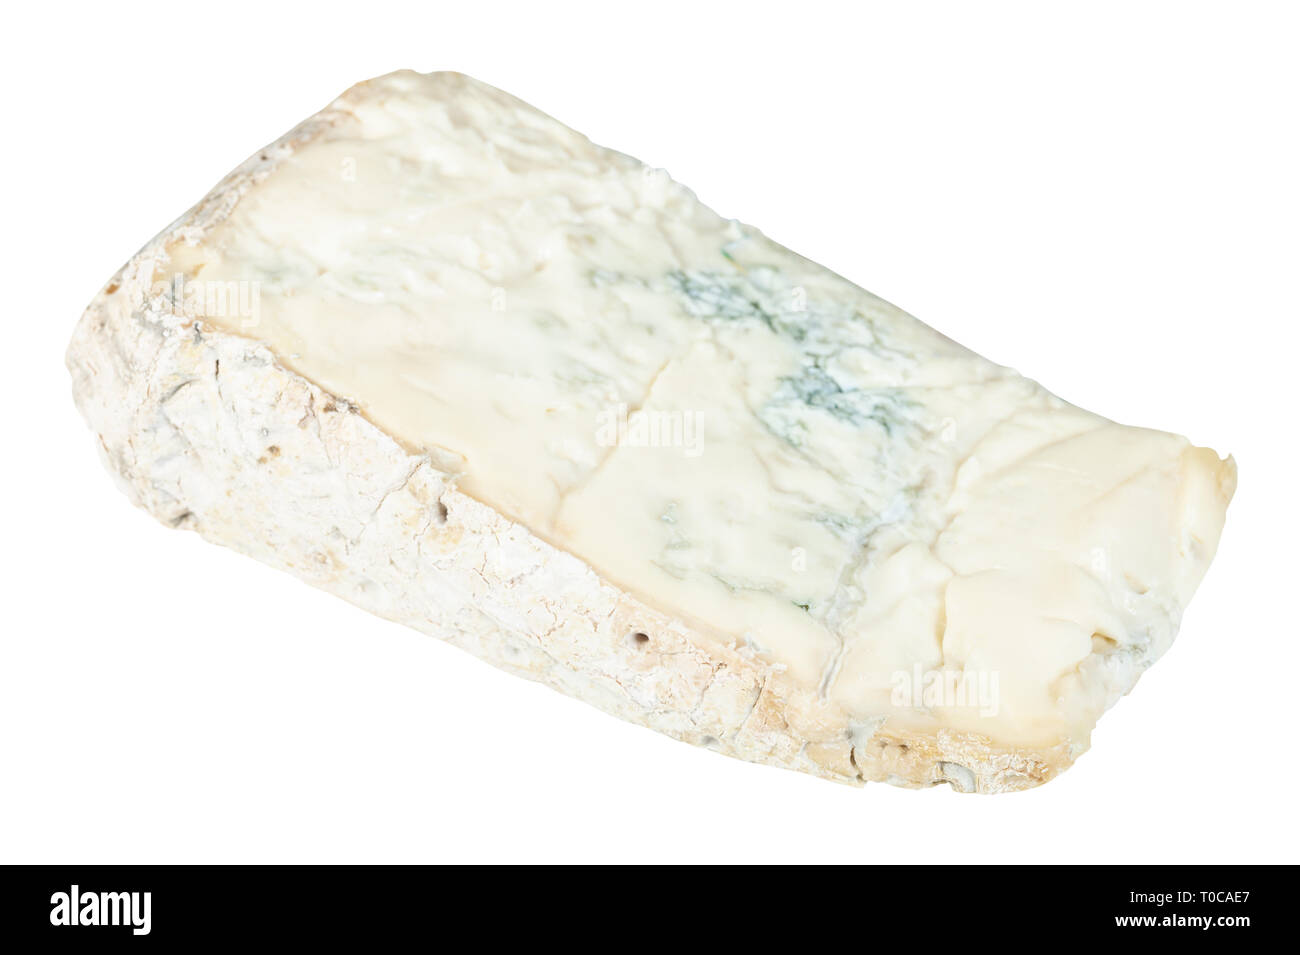 Trozo de Gorgonzola italiano local de queso azul suave aislado sobre fondo blanco. Foto de stock